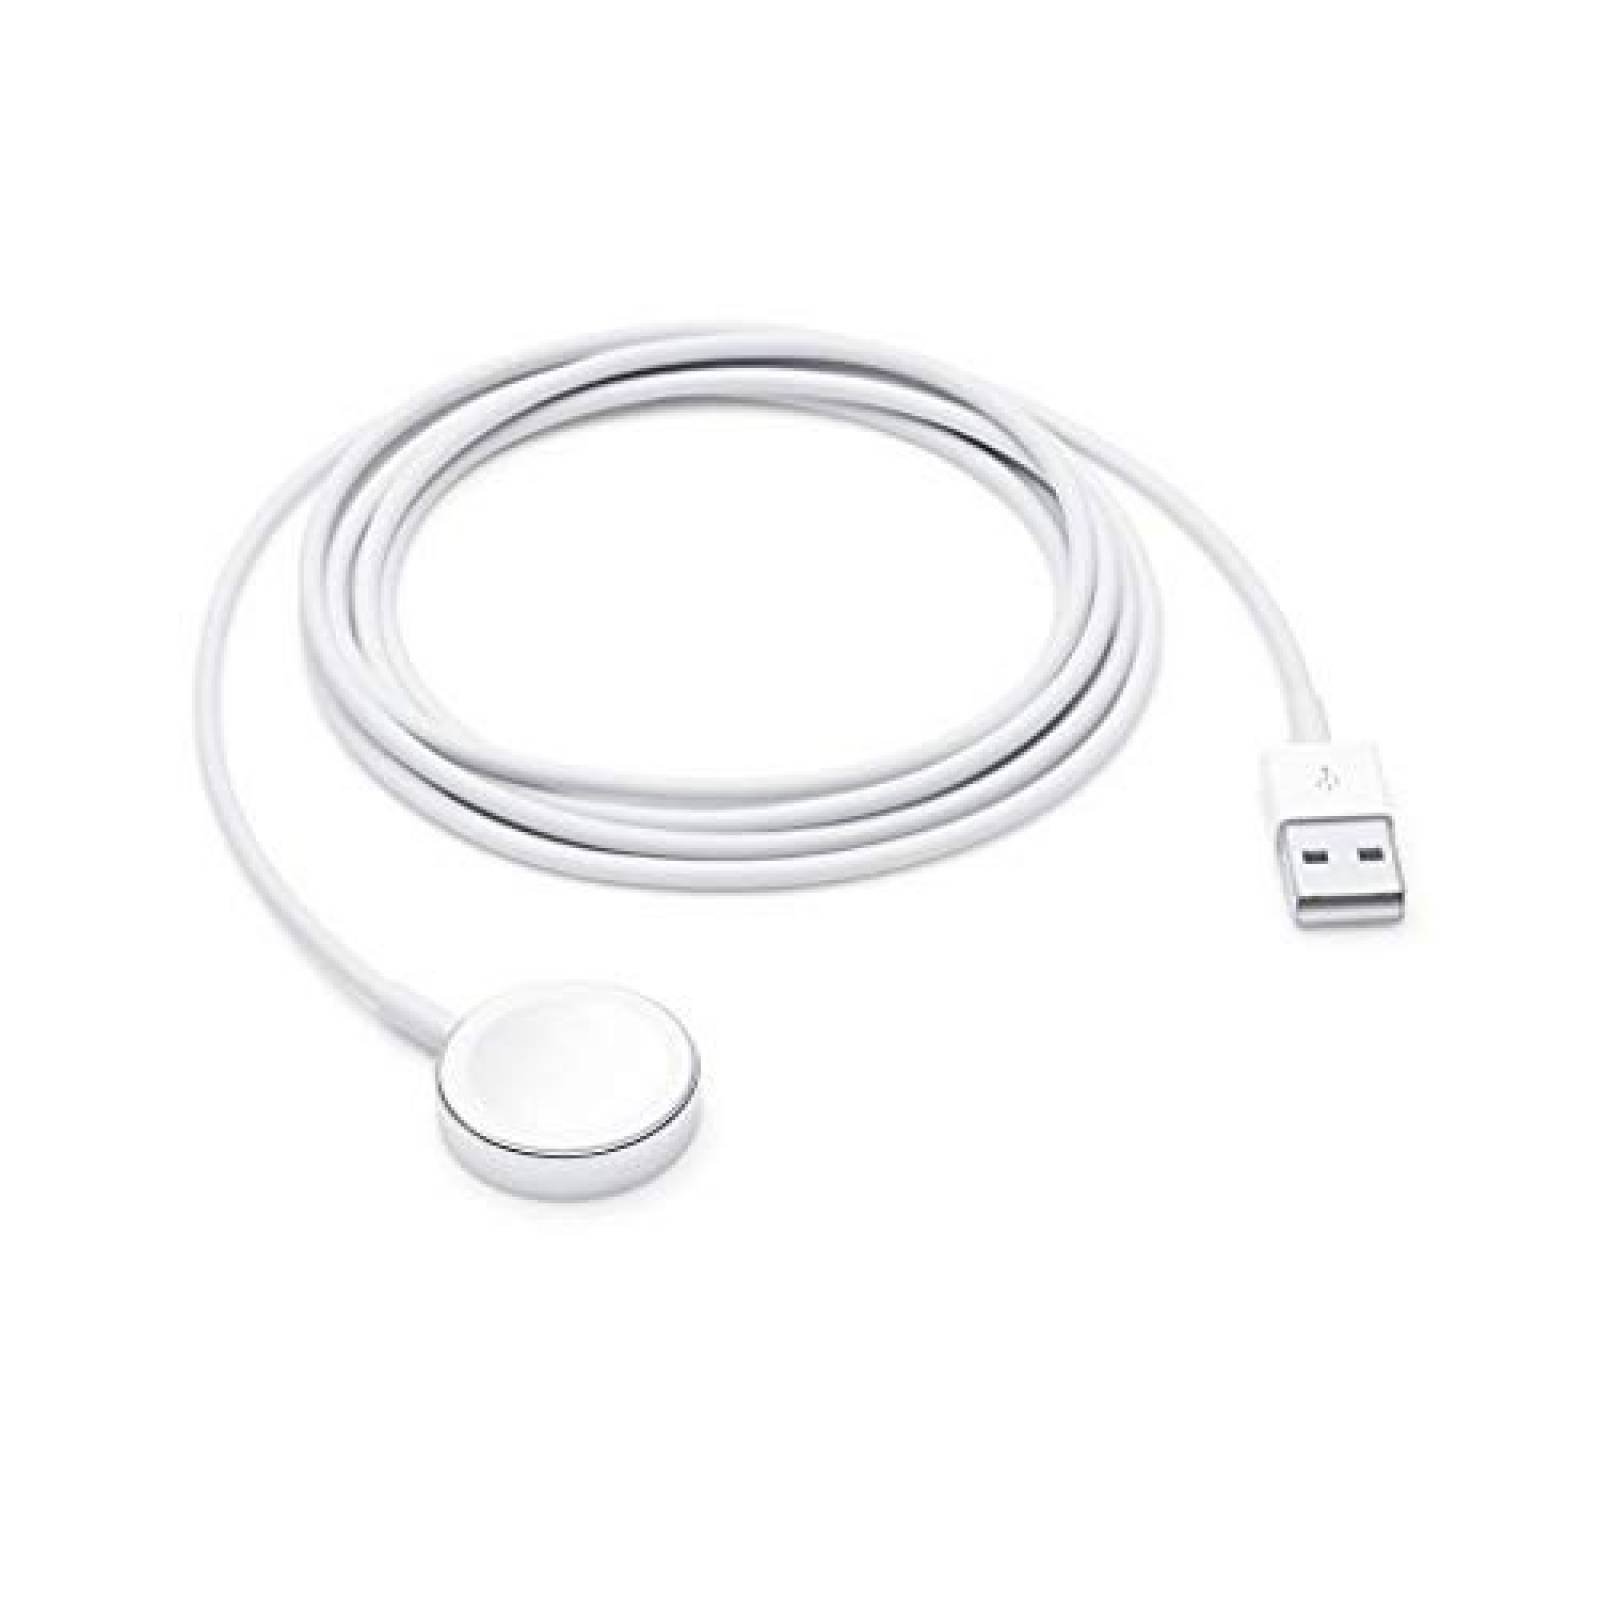 Cable Cargador Apple Watch 2m de Carga Magnética -Blanco